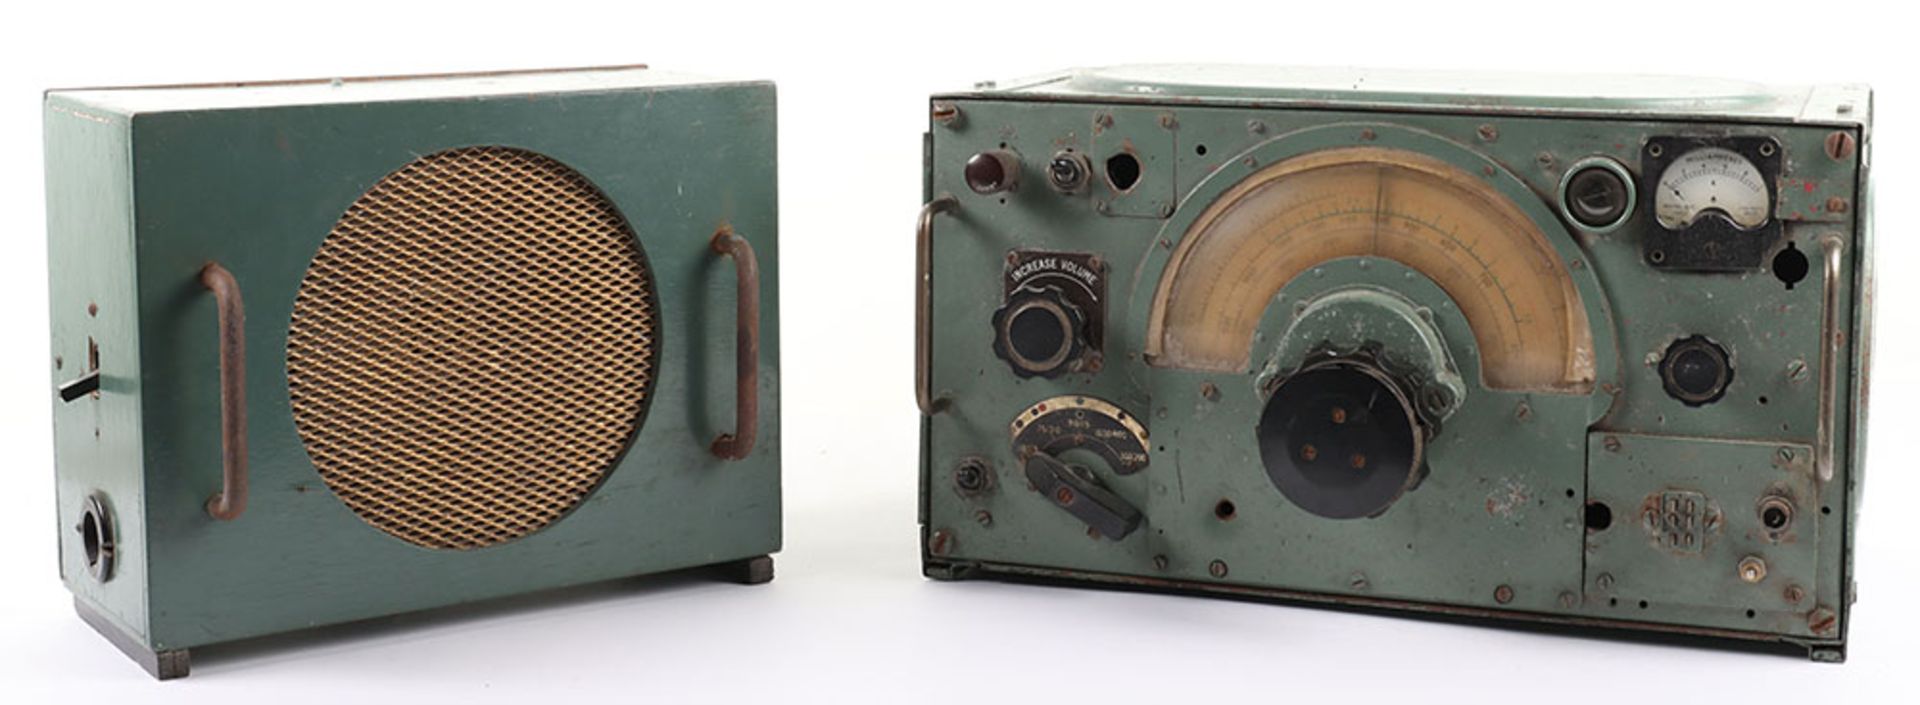 British military radio receiver